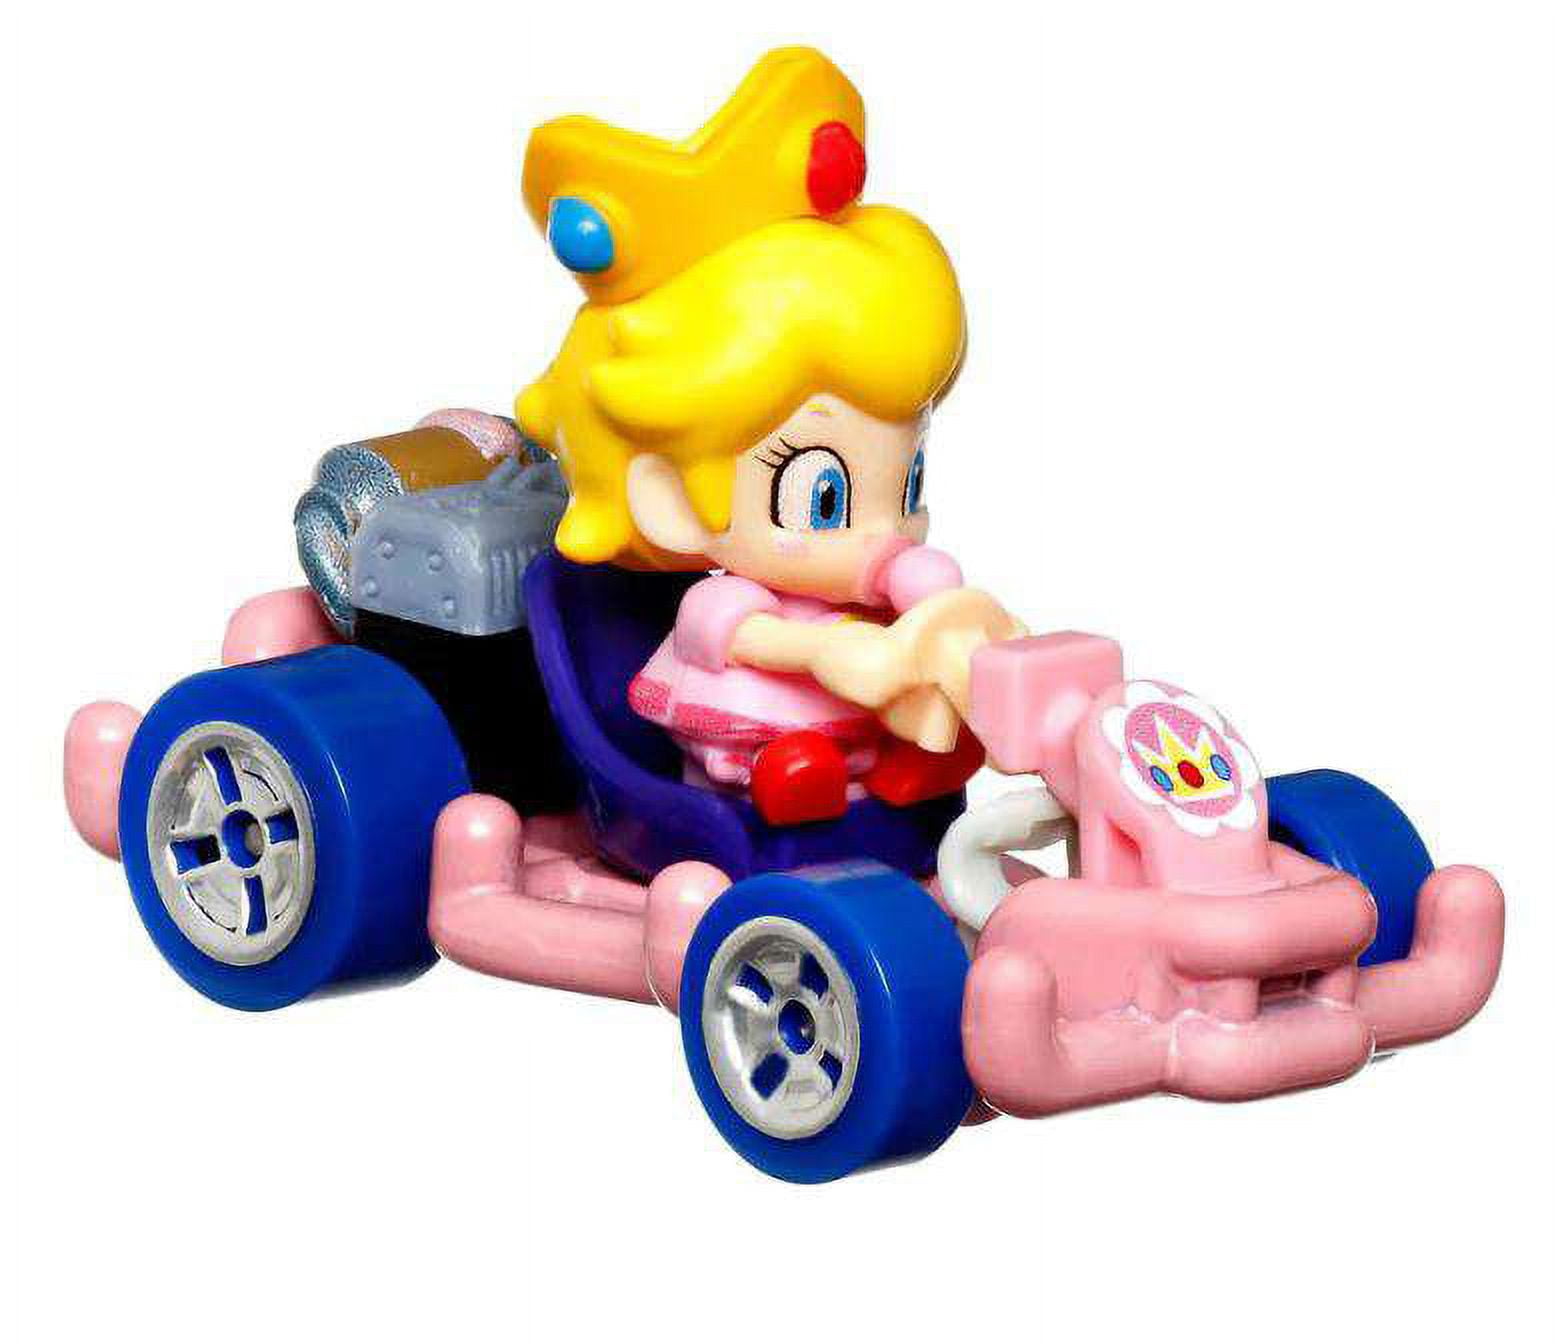 Mattel® Hot Wheels® Mario Kart™ Peach Standard Kart Toy Vehicle, 1 ct -  Kroger